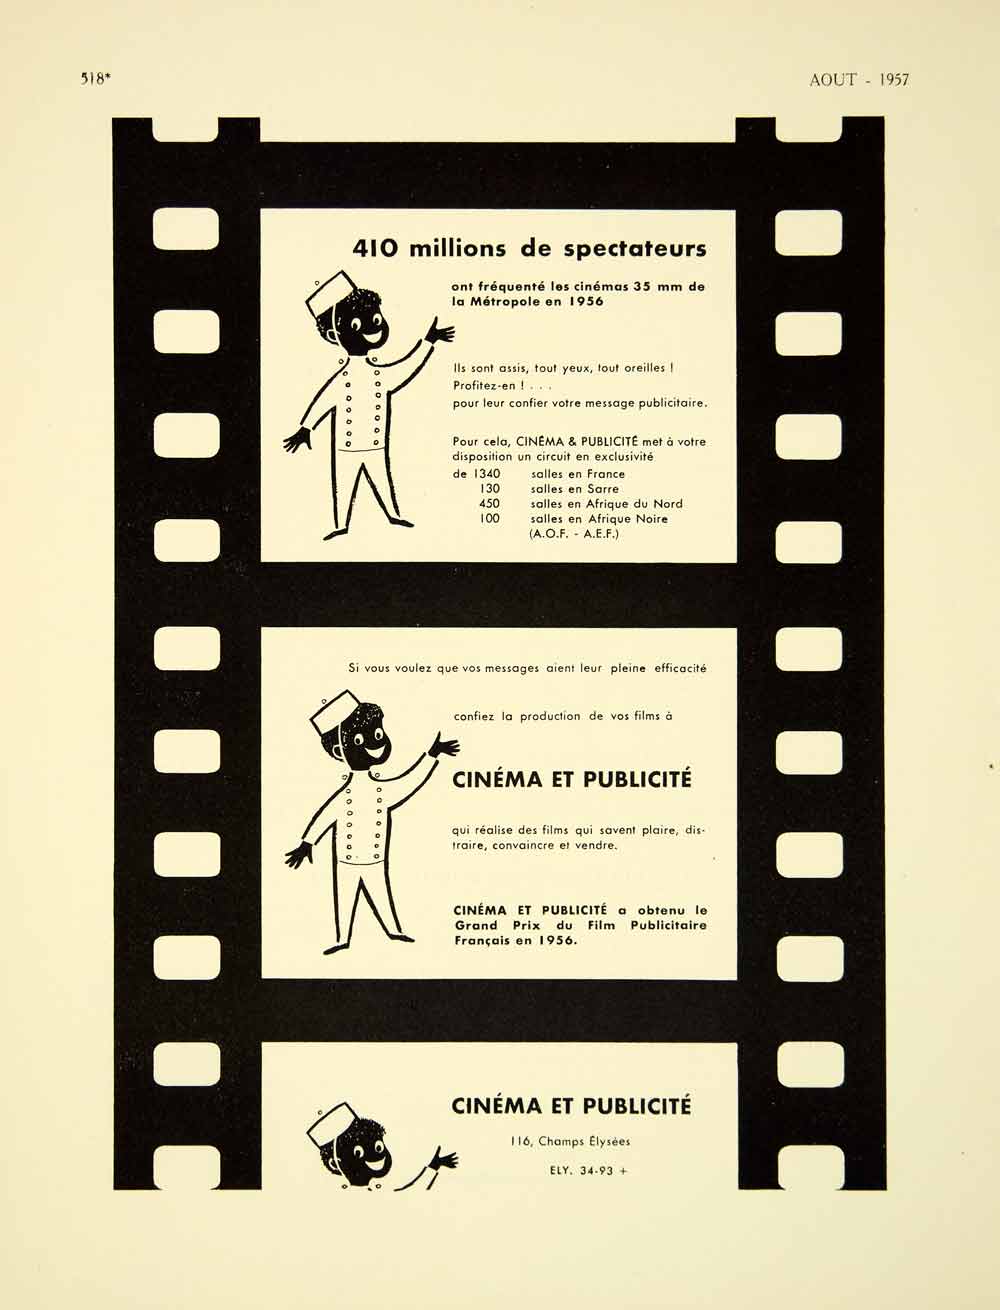 1957 Ad French Advertisement Cinema et Publicite Theatre Film 116 Champs VENA6